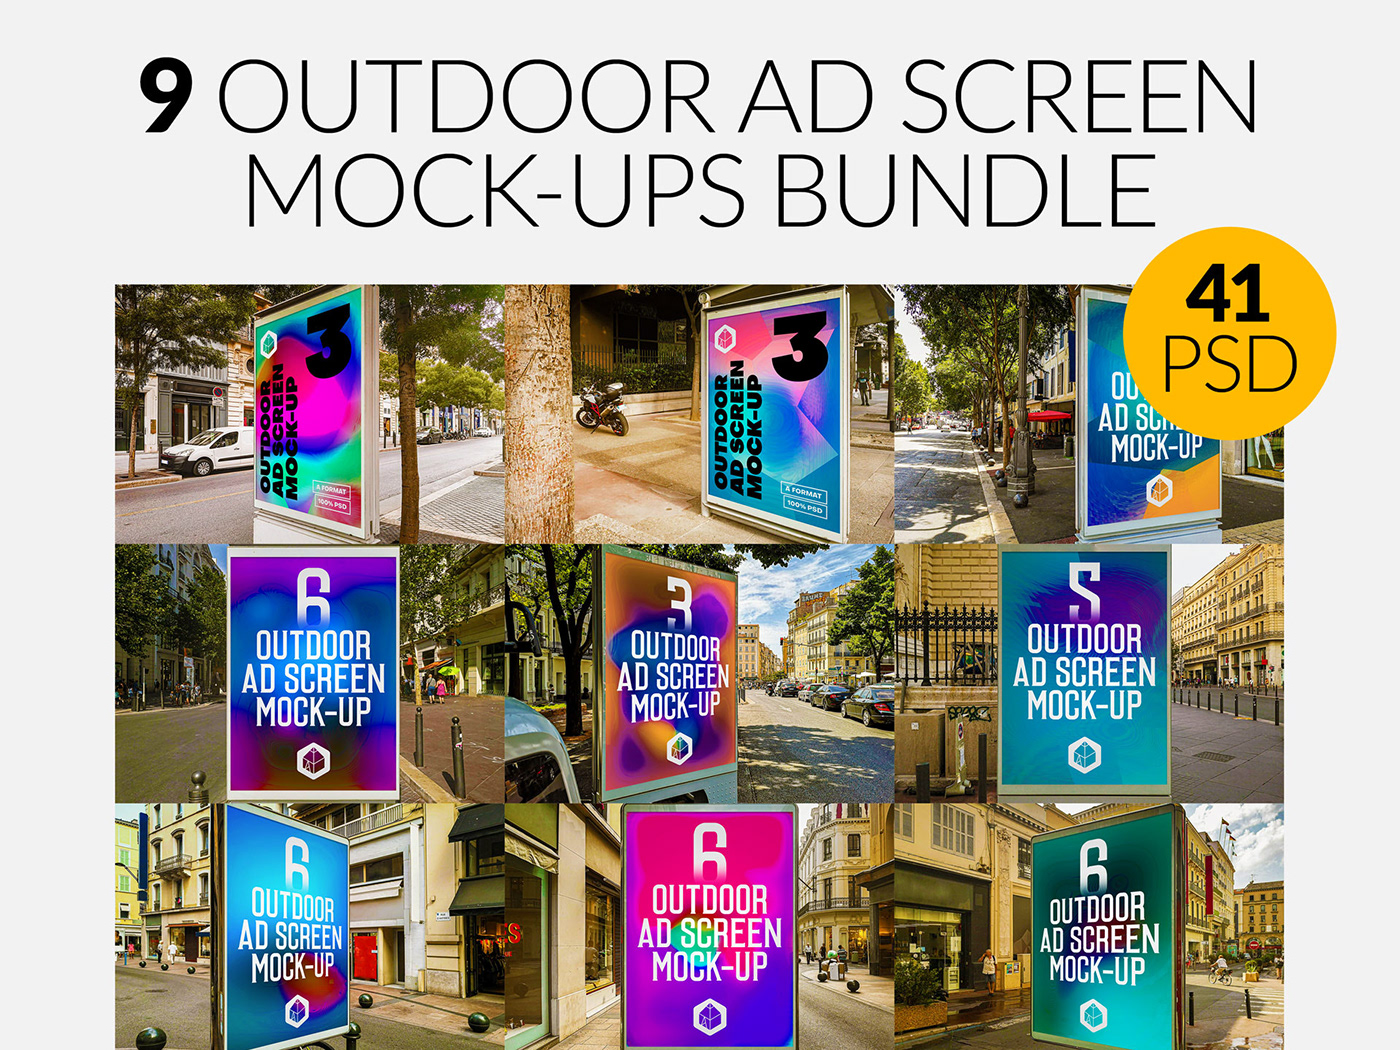 ad advertisement Advertising  Display mock-up Mockup Outdoor poster screen Street